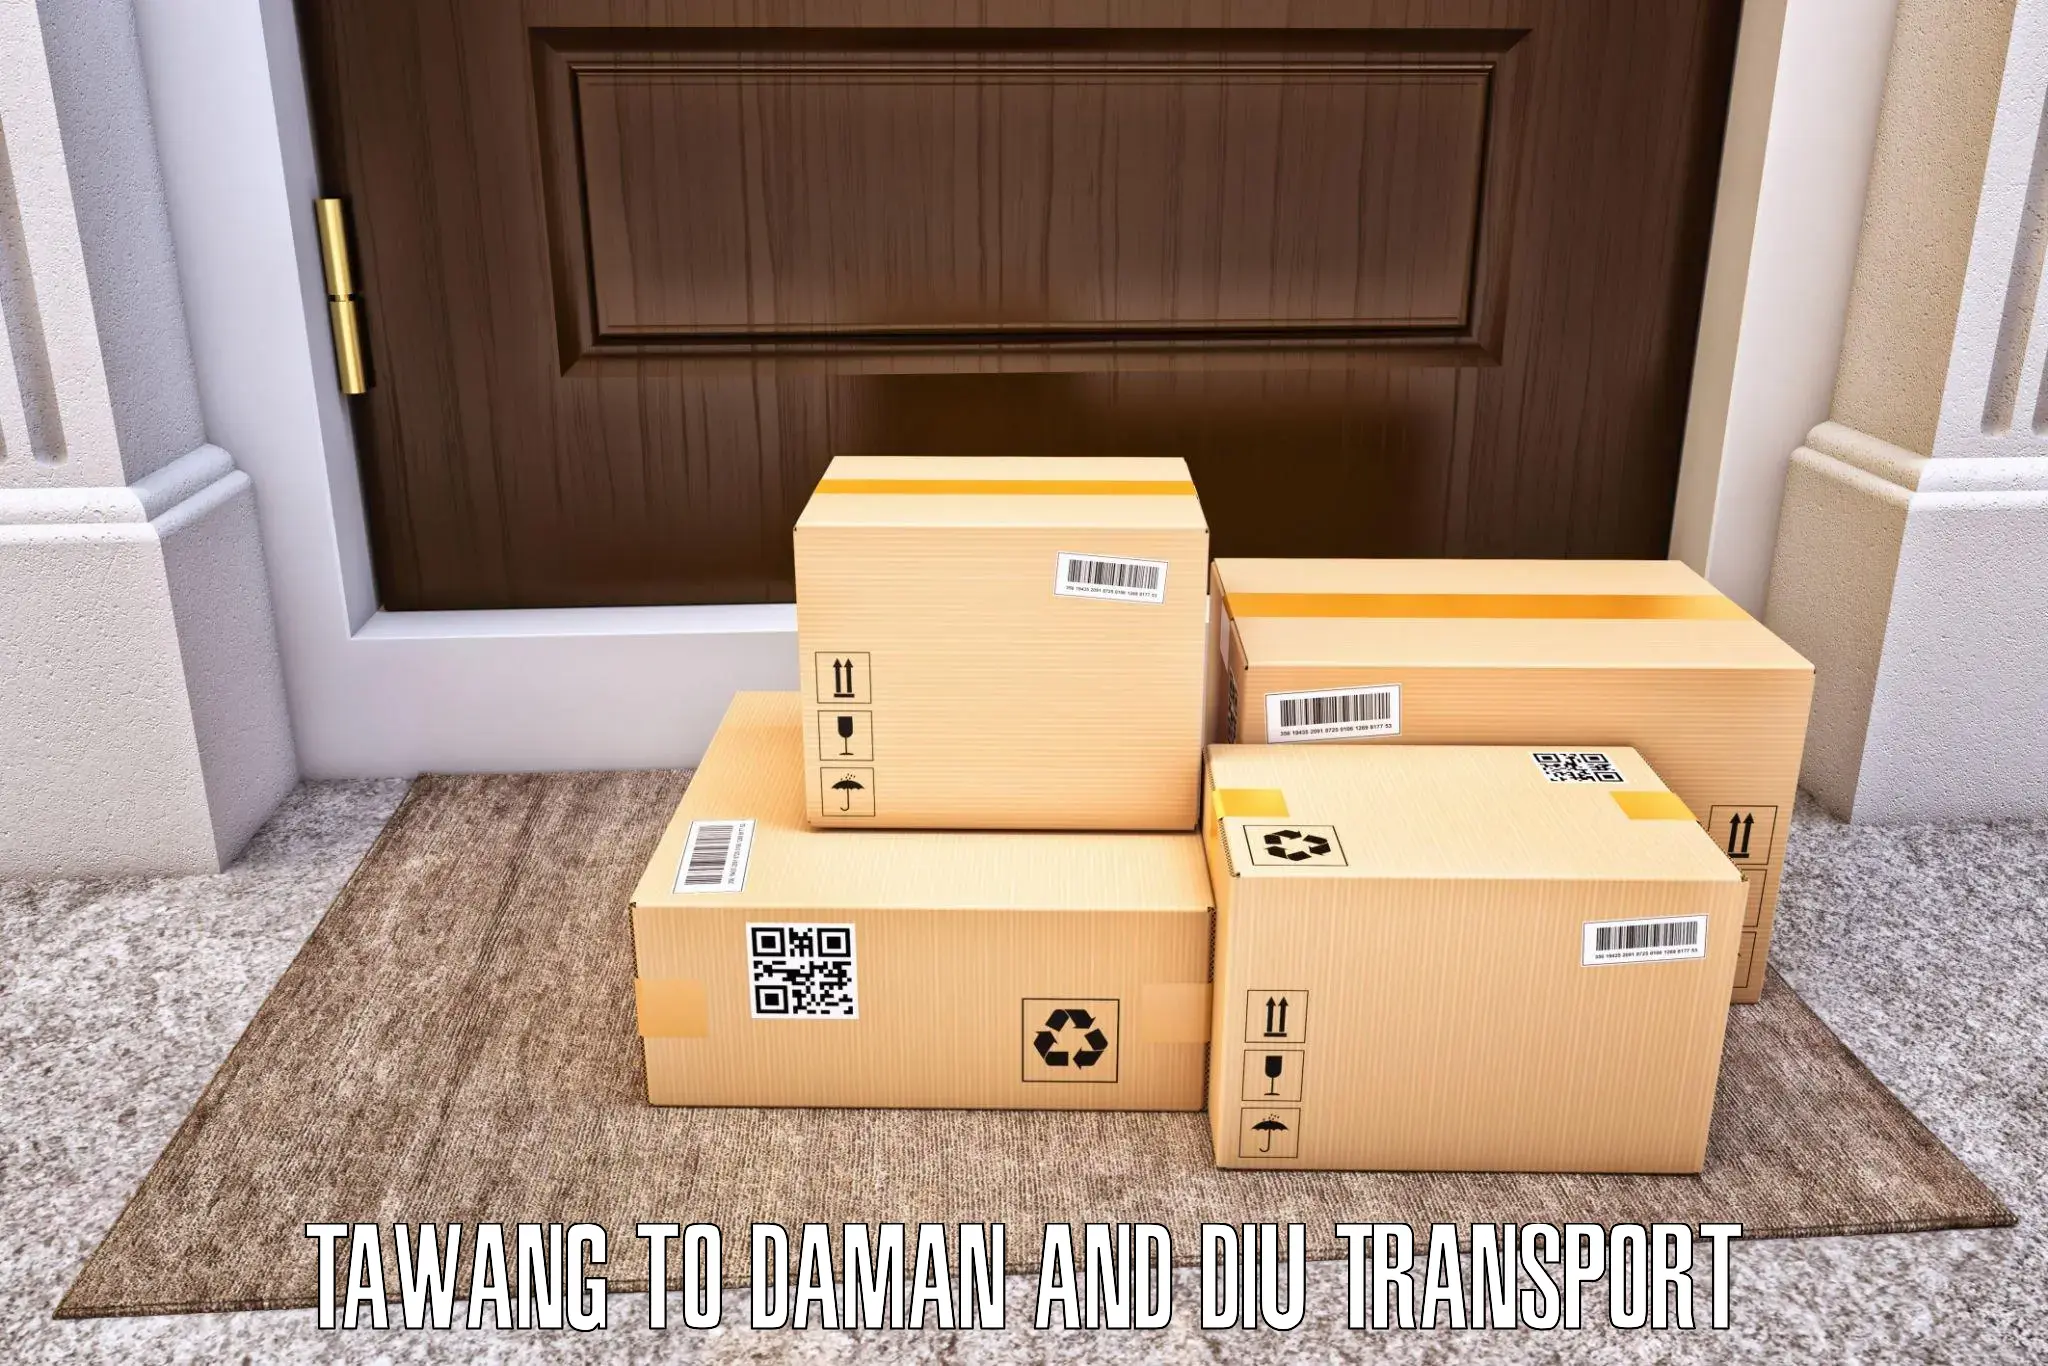 Vehicle transport services Tawang to Daman and Diu